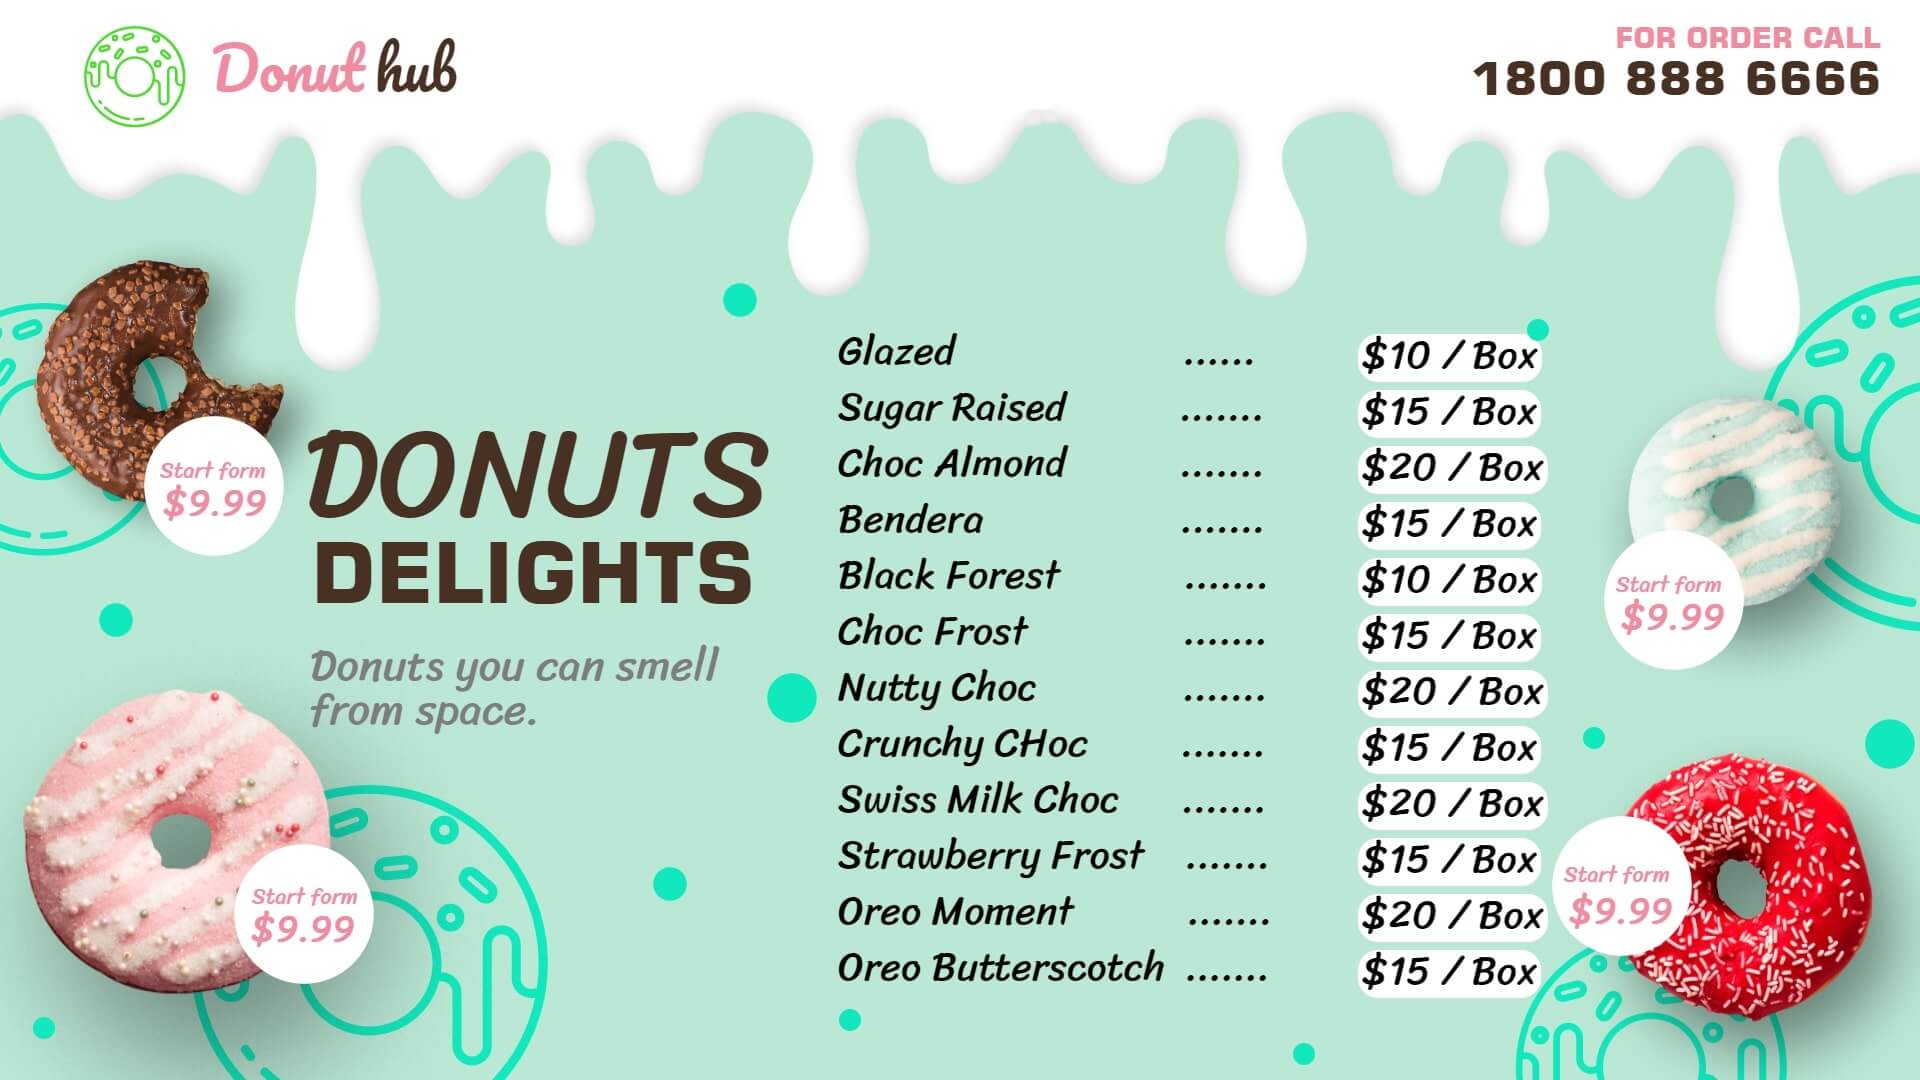 donuts delight offer tv screen menu